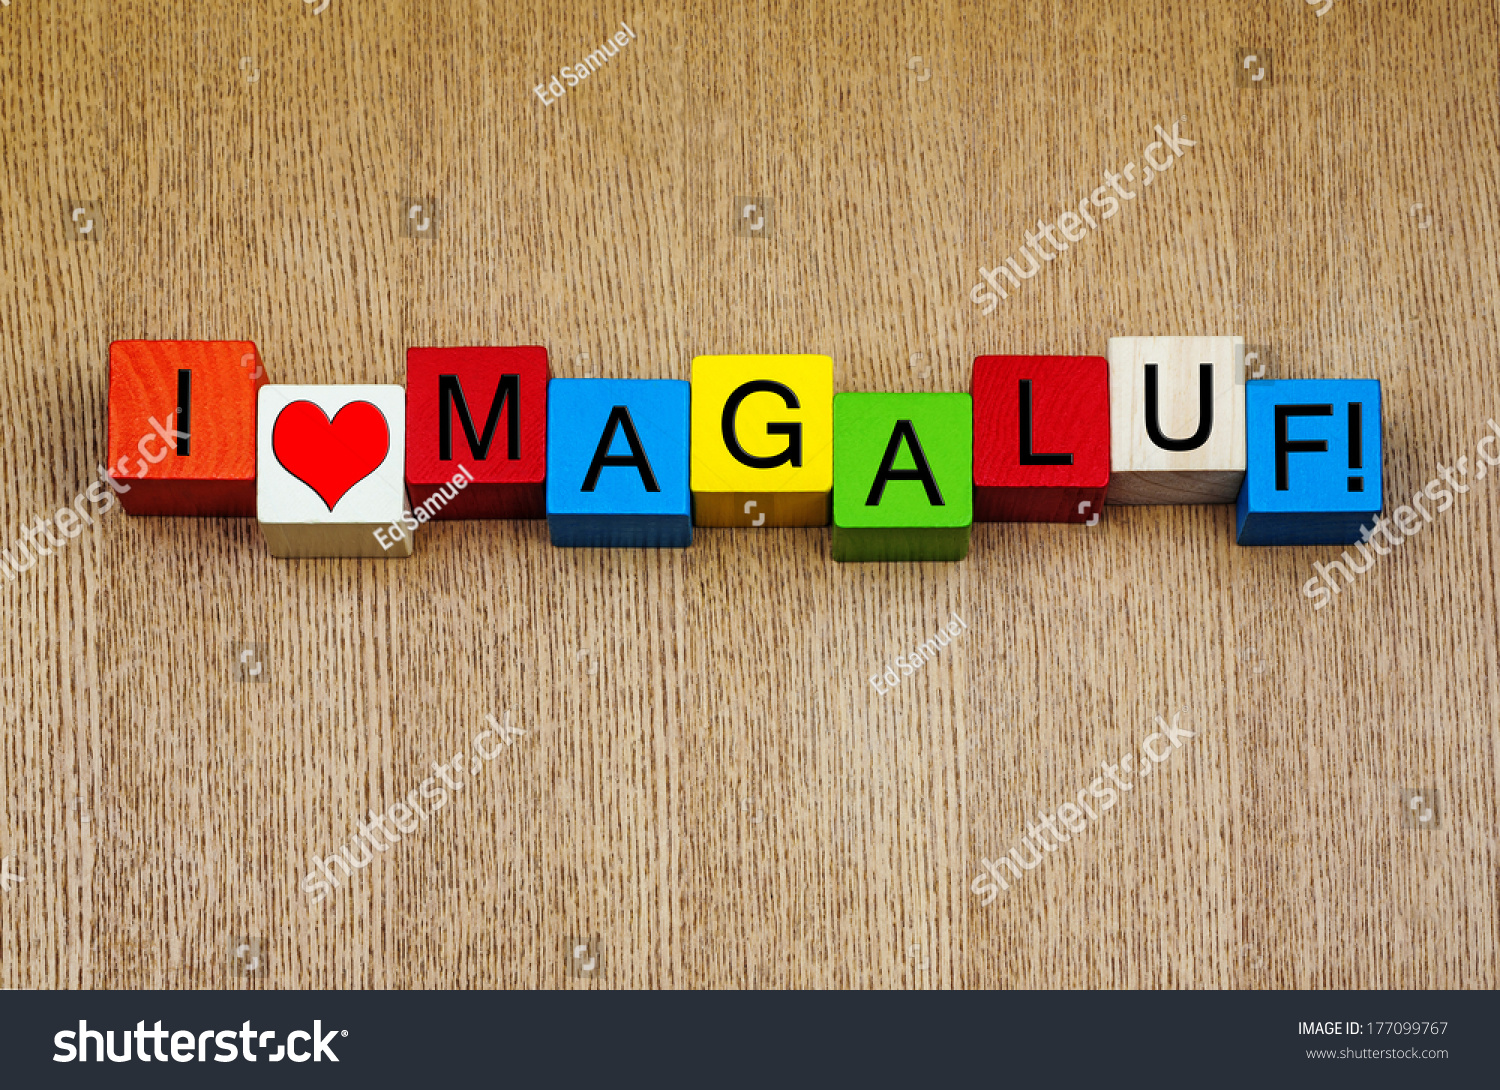 Magaluf Serie